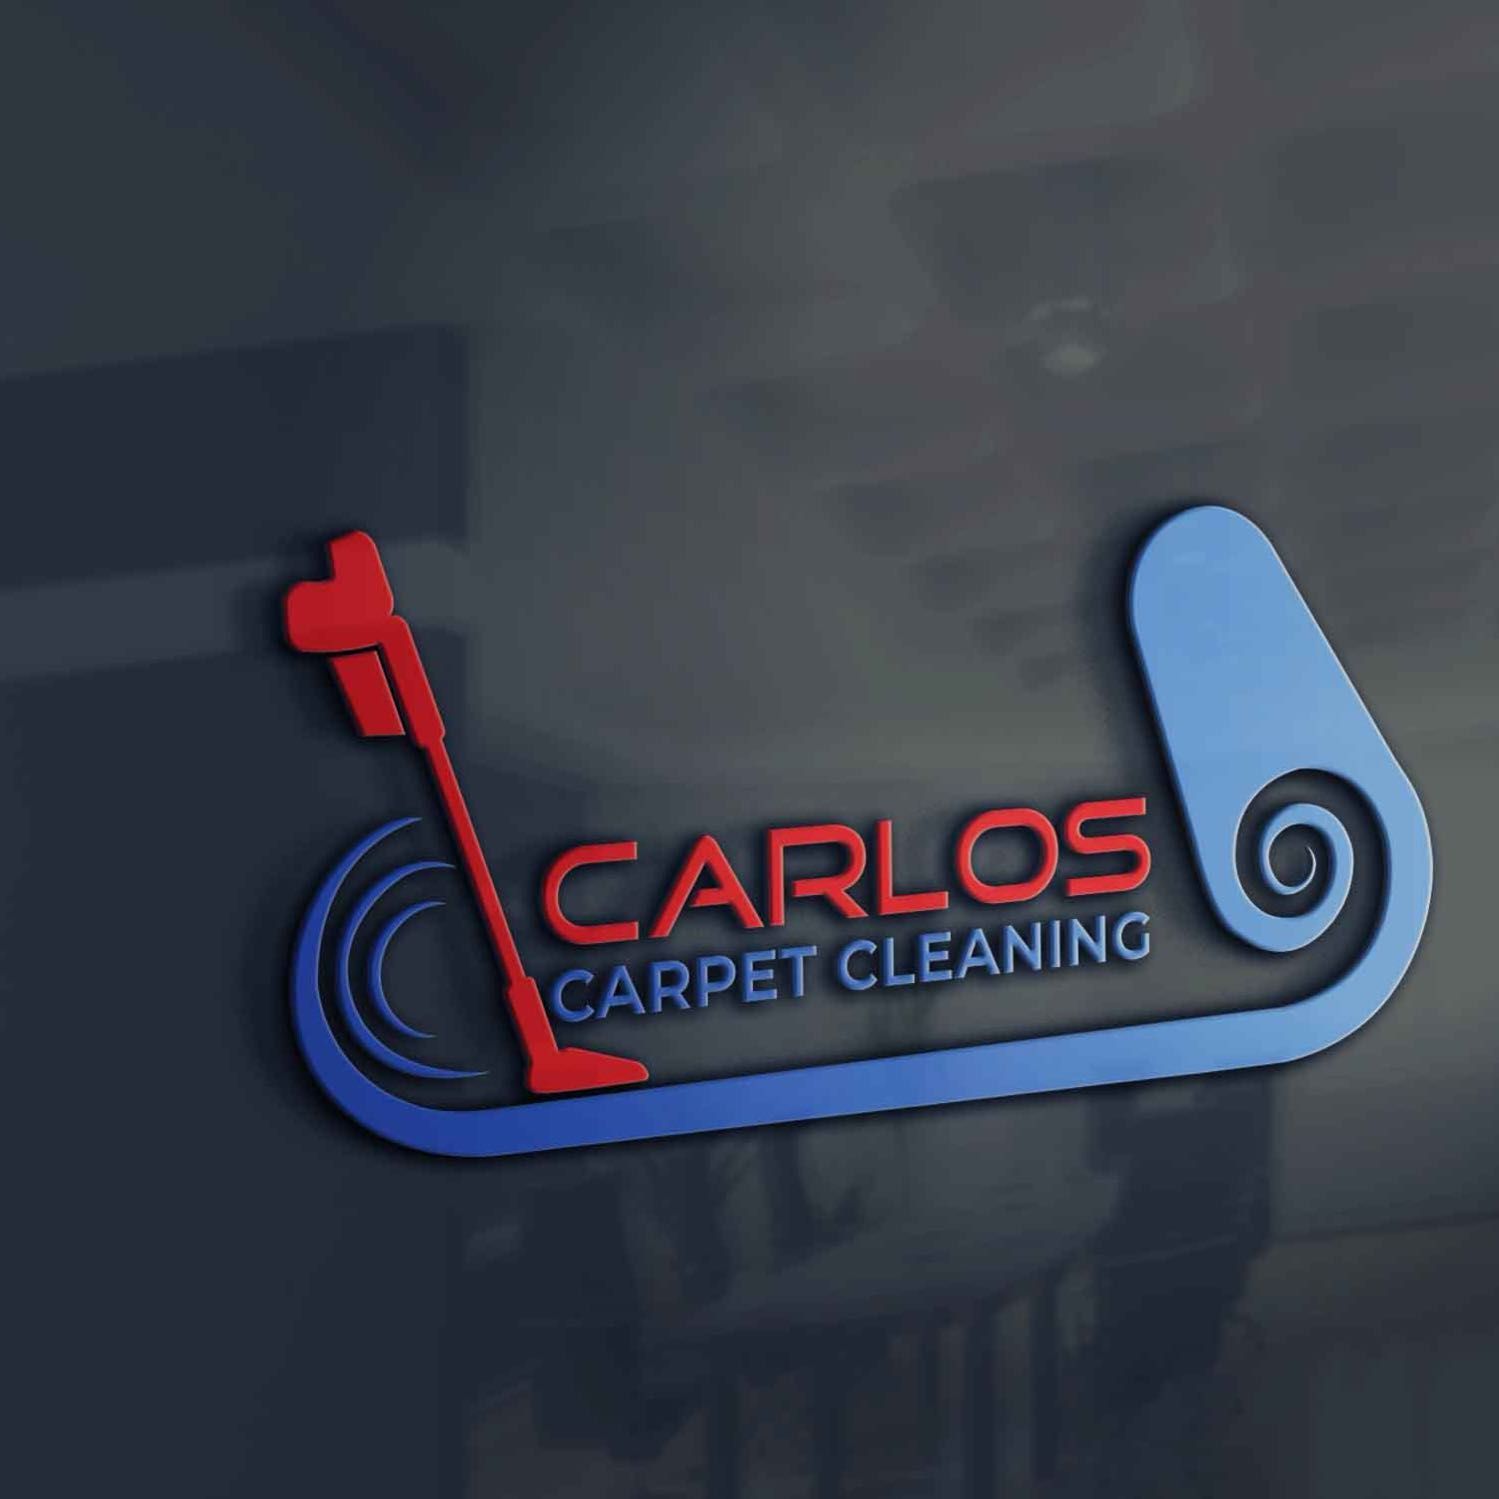 Carlos Carpet Cleaning, Desert Hot Springs, 92240